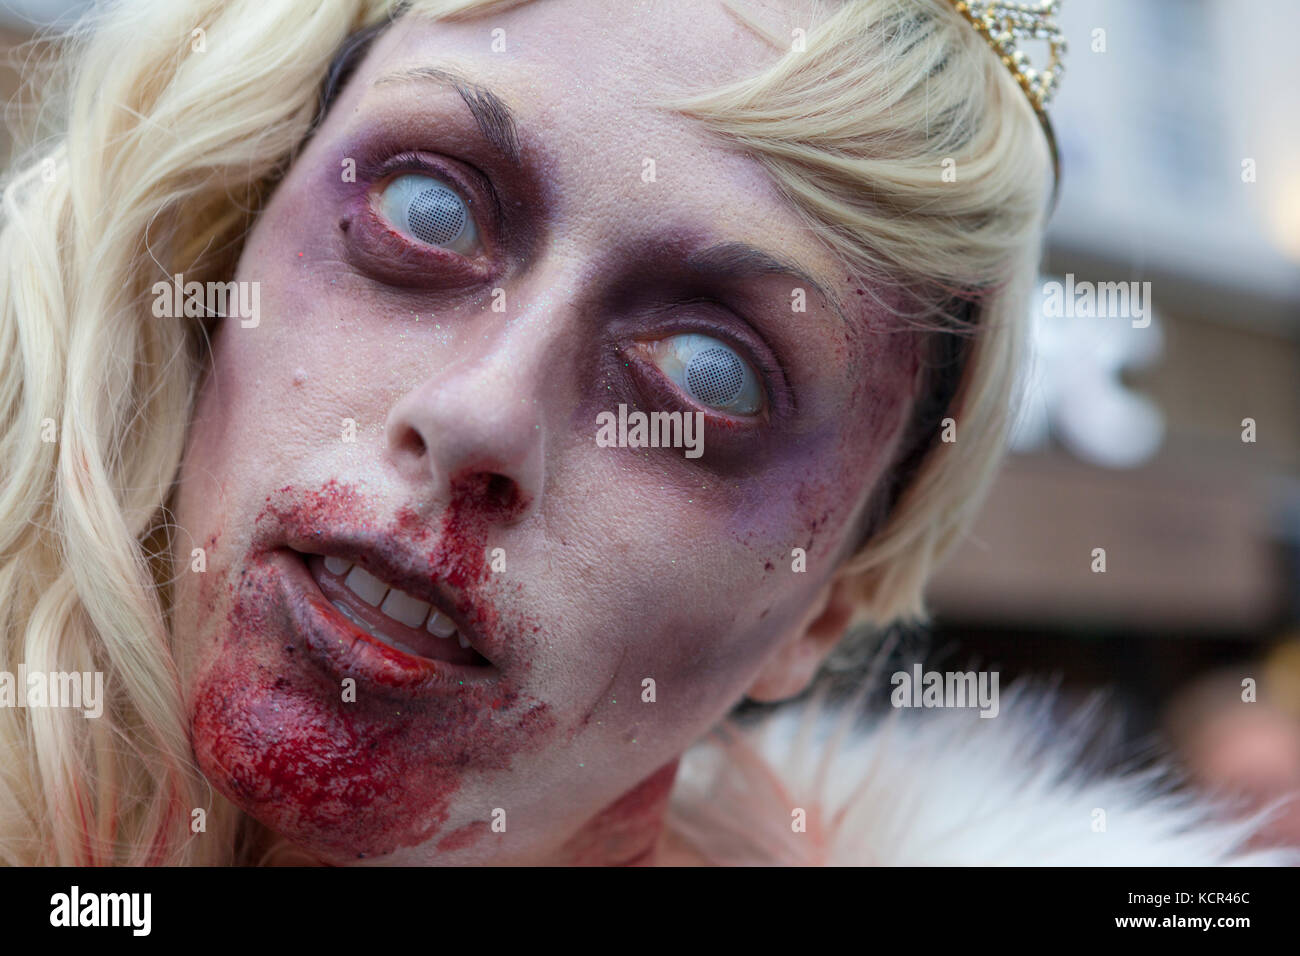 World zombie day 2017 fotografías e imágenes de alta resolución - Alamy